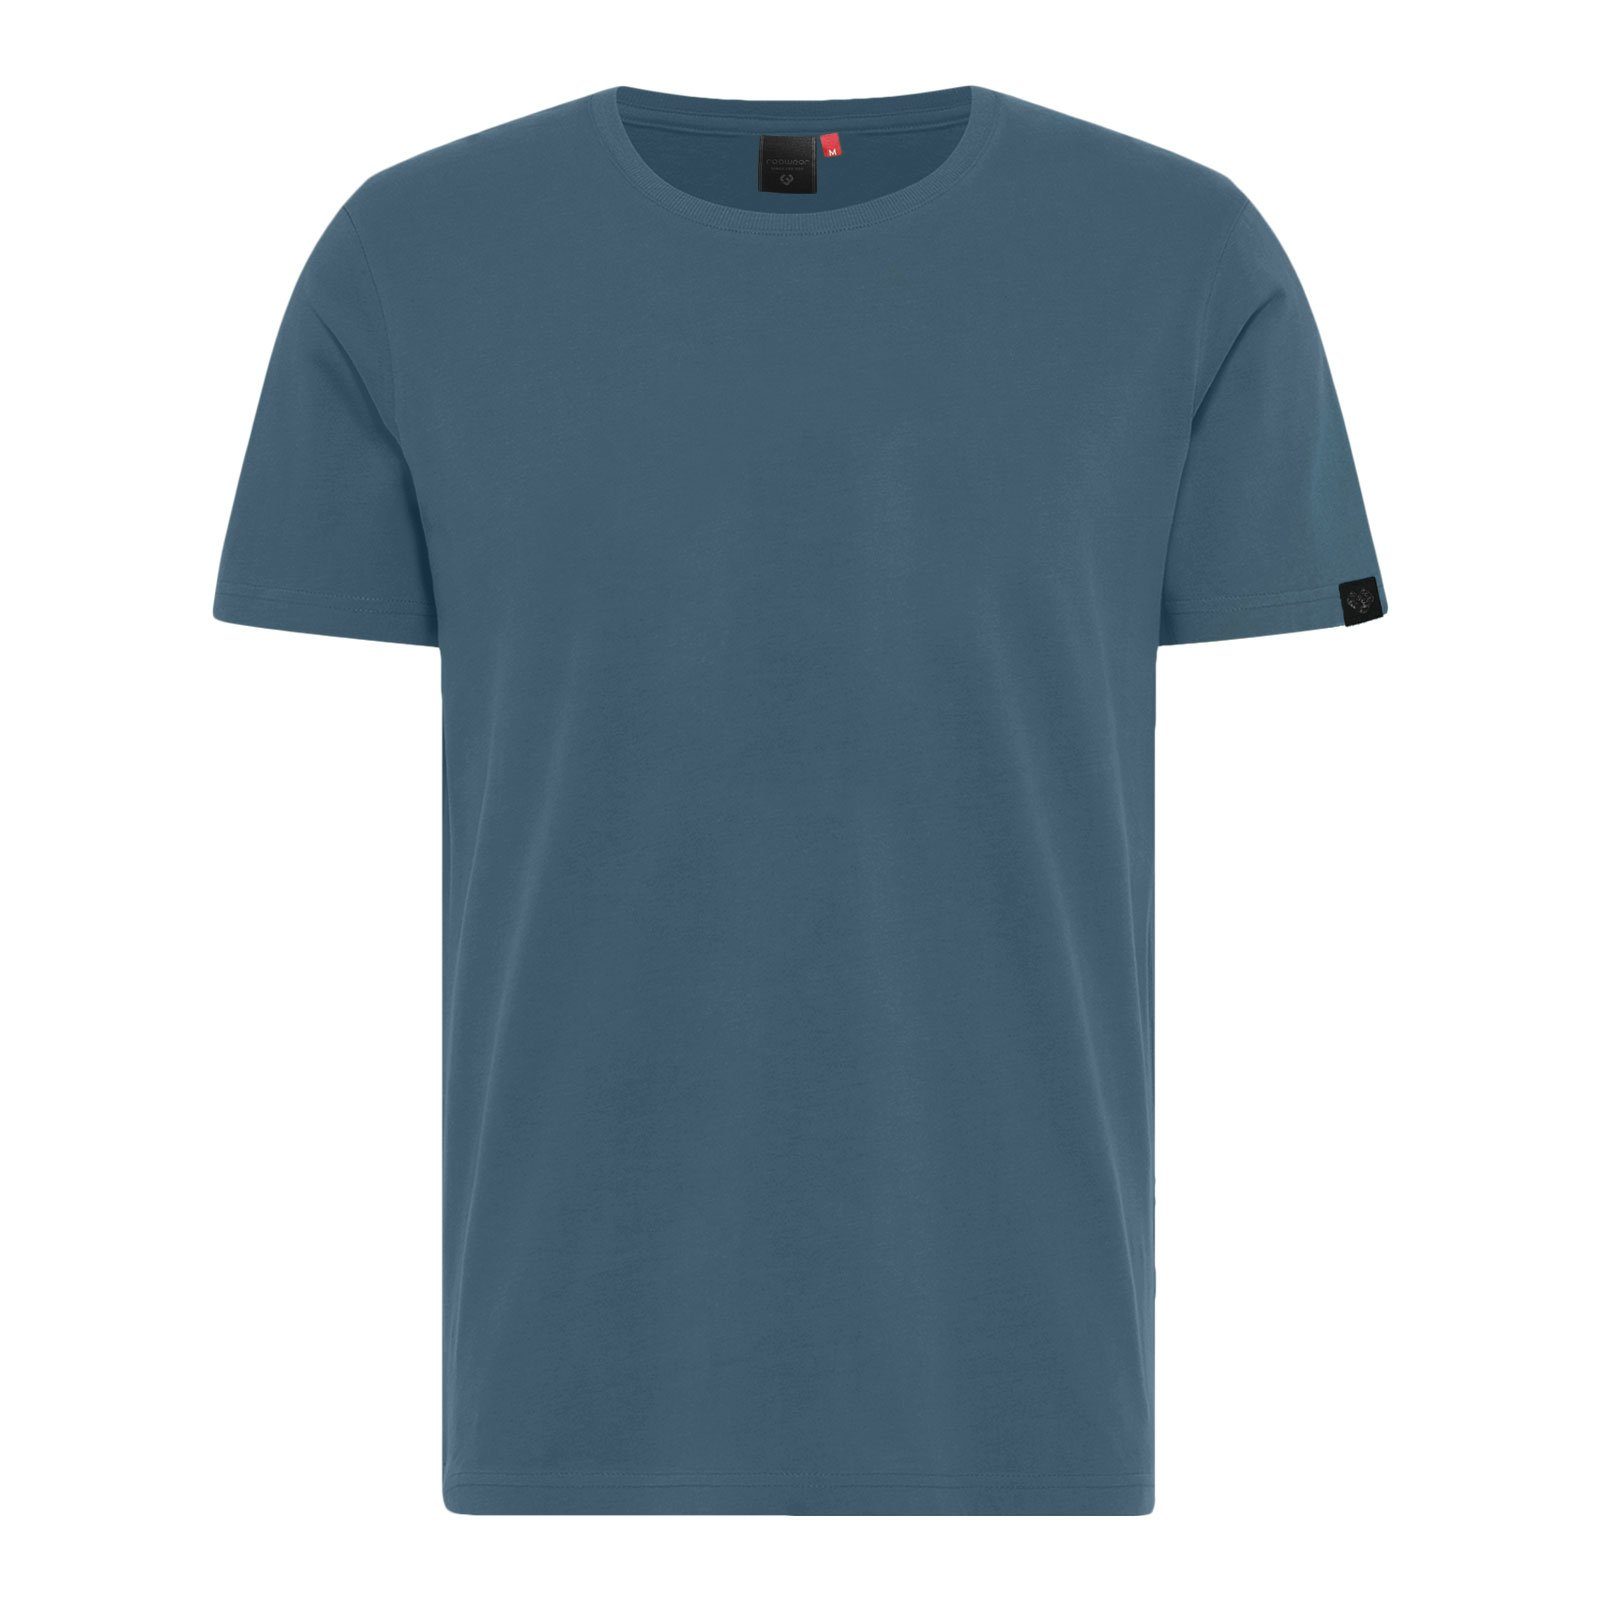 Ragwear T-Shirt Tonar mit Label-Patch am Arm 2026 stone blue